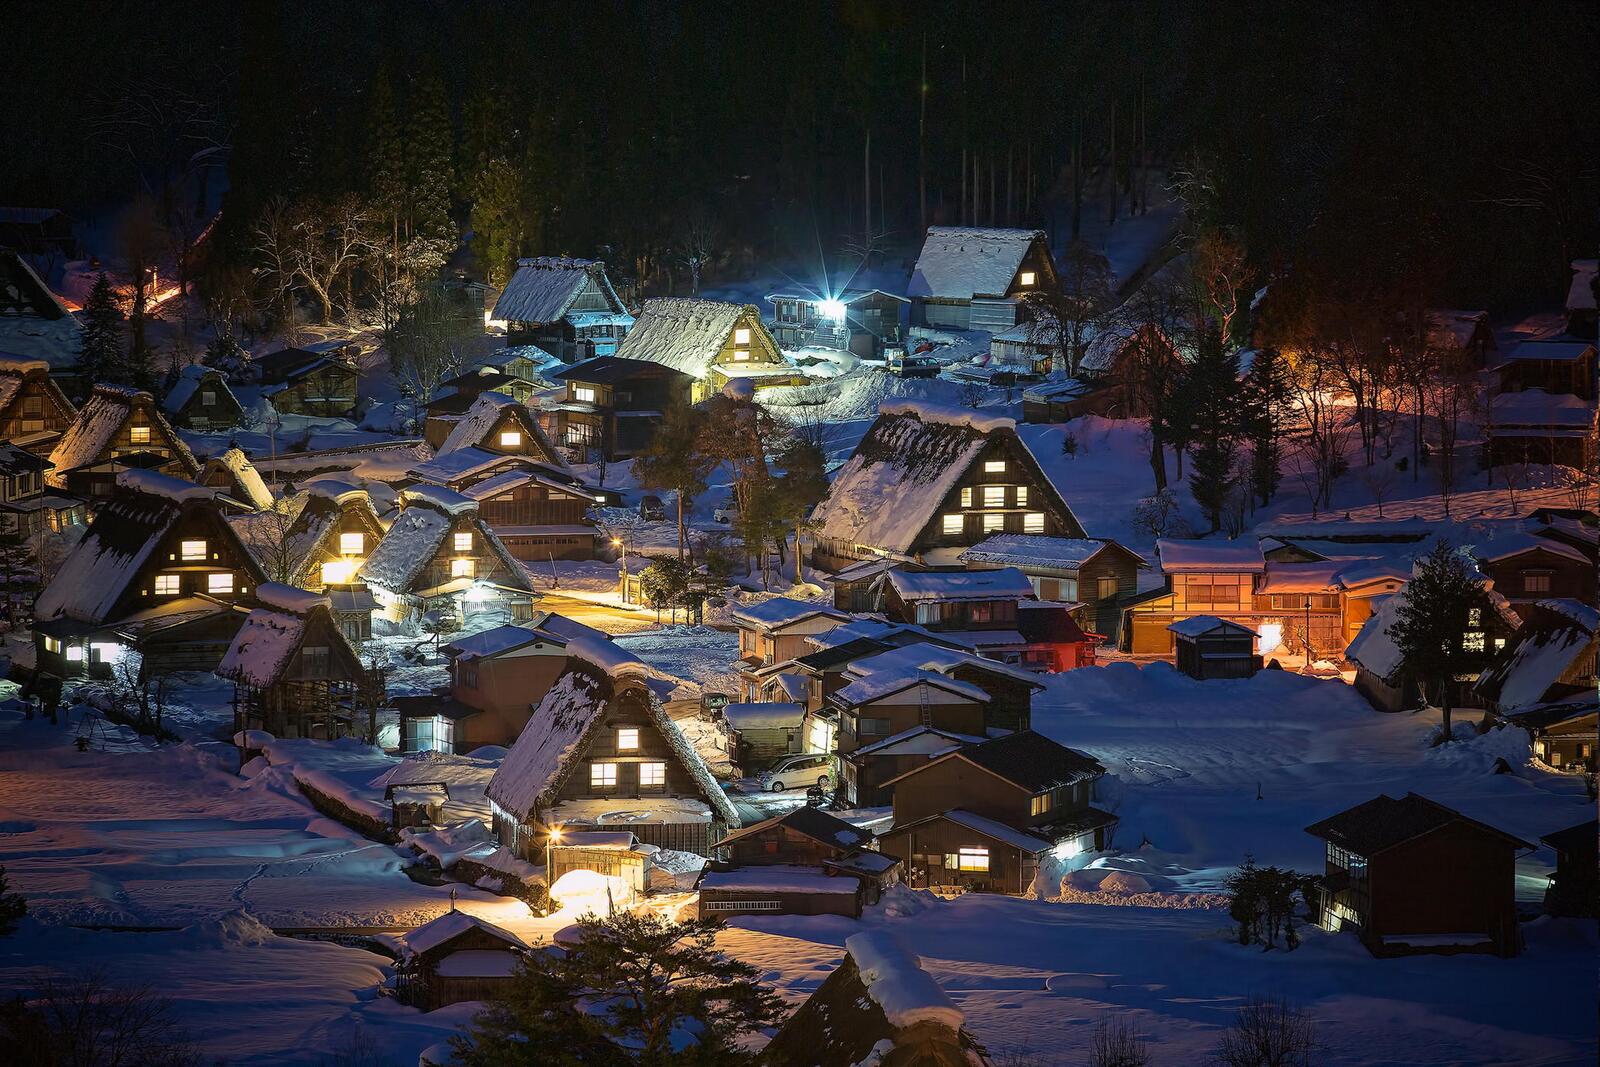 Free photo A nighttime winter village